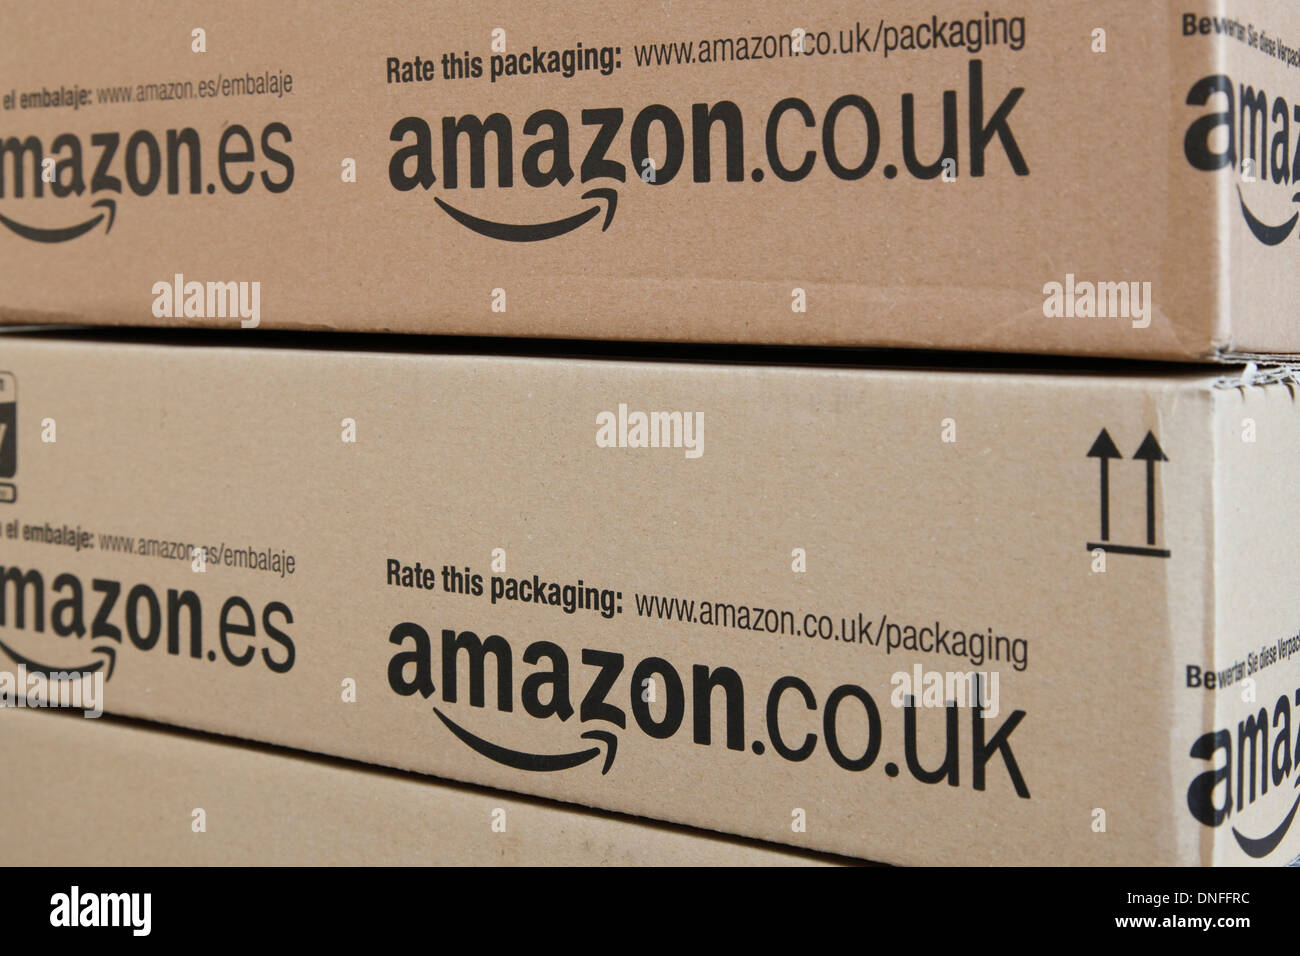 Amazon Boxes with logo and web adresse Stock Photo